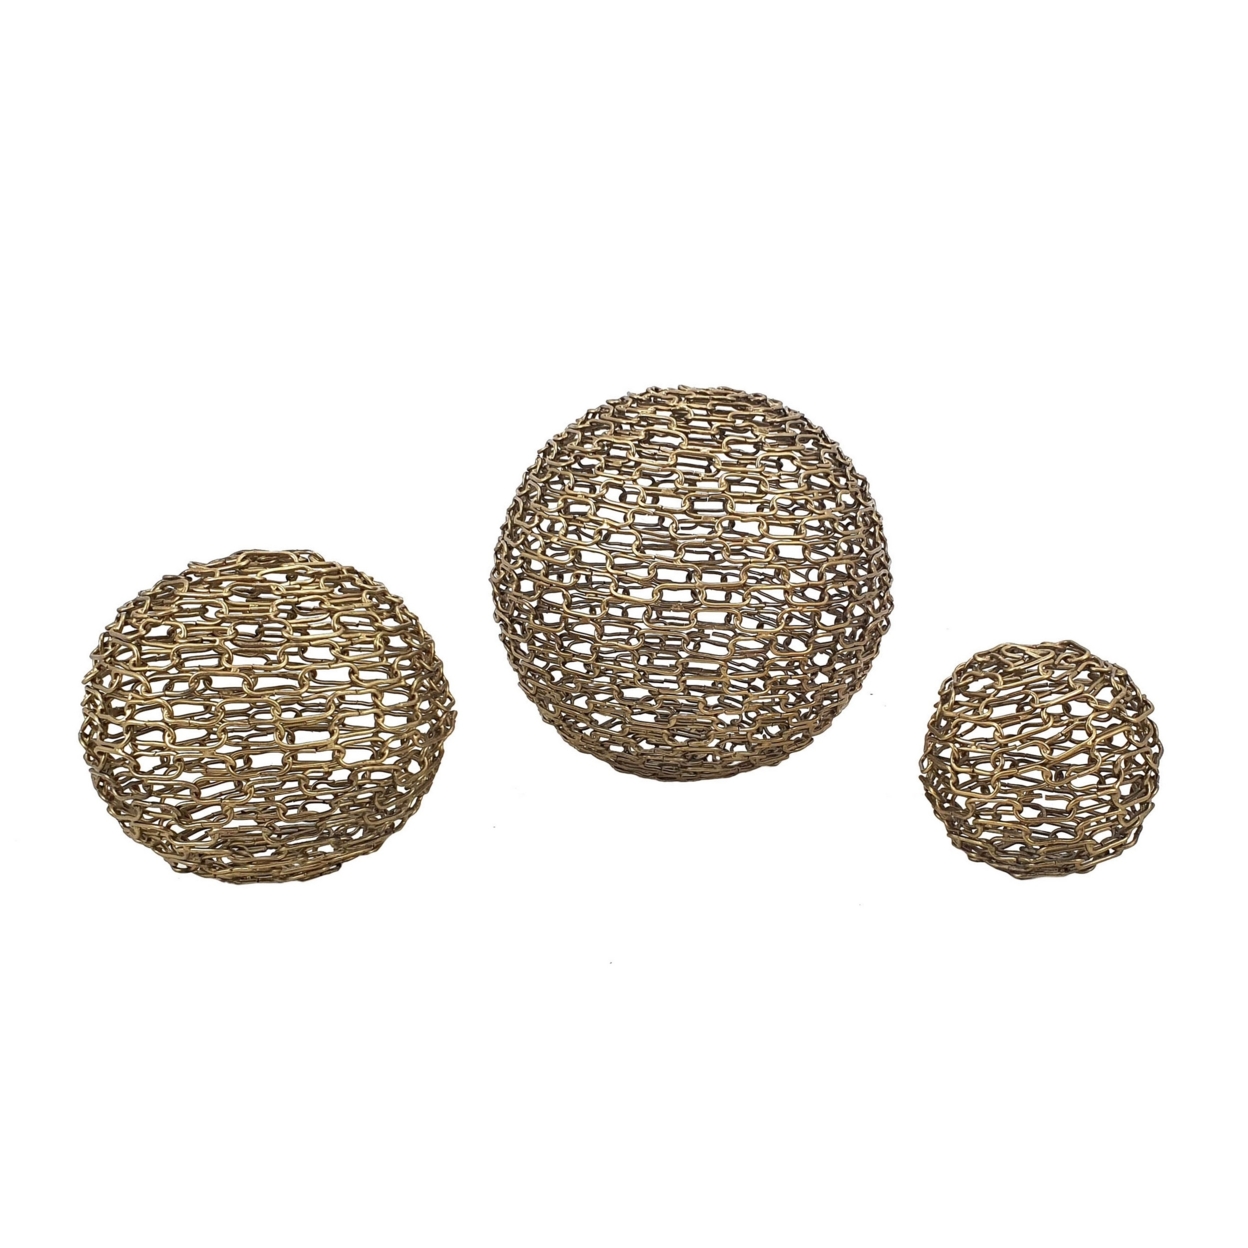 7, 5, 4 Inch Decorative Ball Set Of 3, Gold Finished Iron Interlinked Chain- Saltoro Sherpi